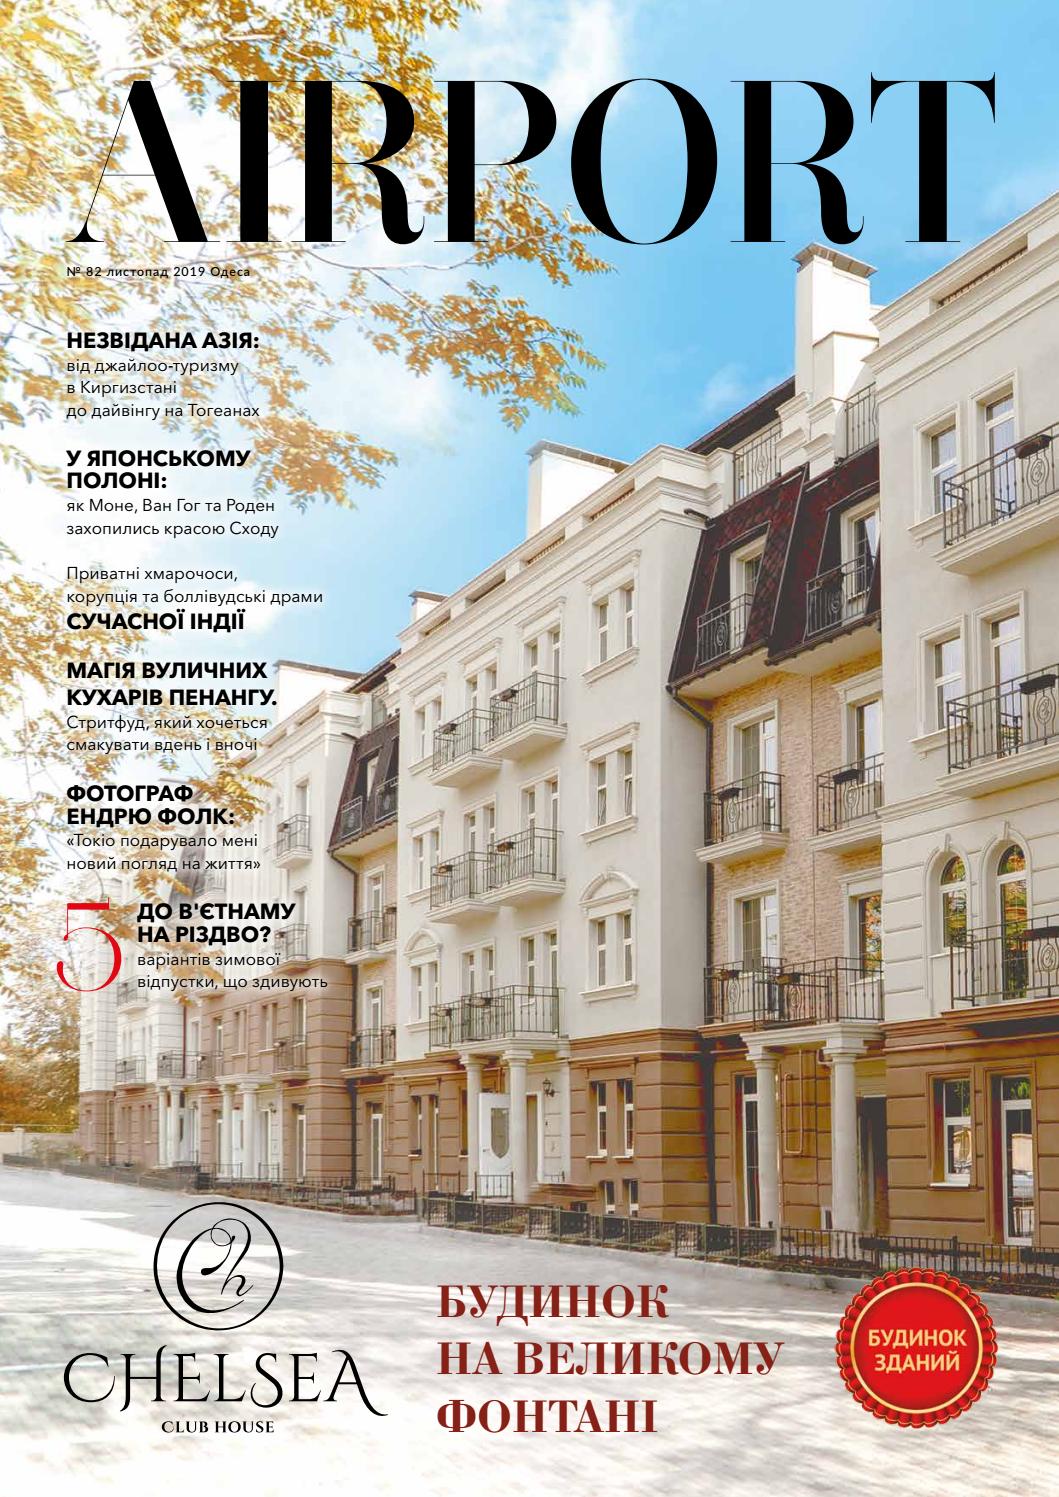 Promo Salon De Jardin Beau November 19 by Airport Magazine Odessa issuu